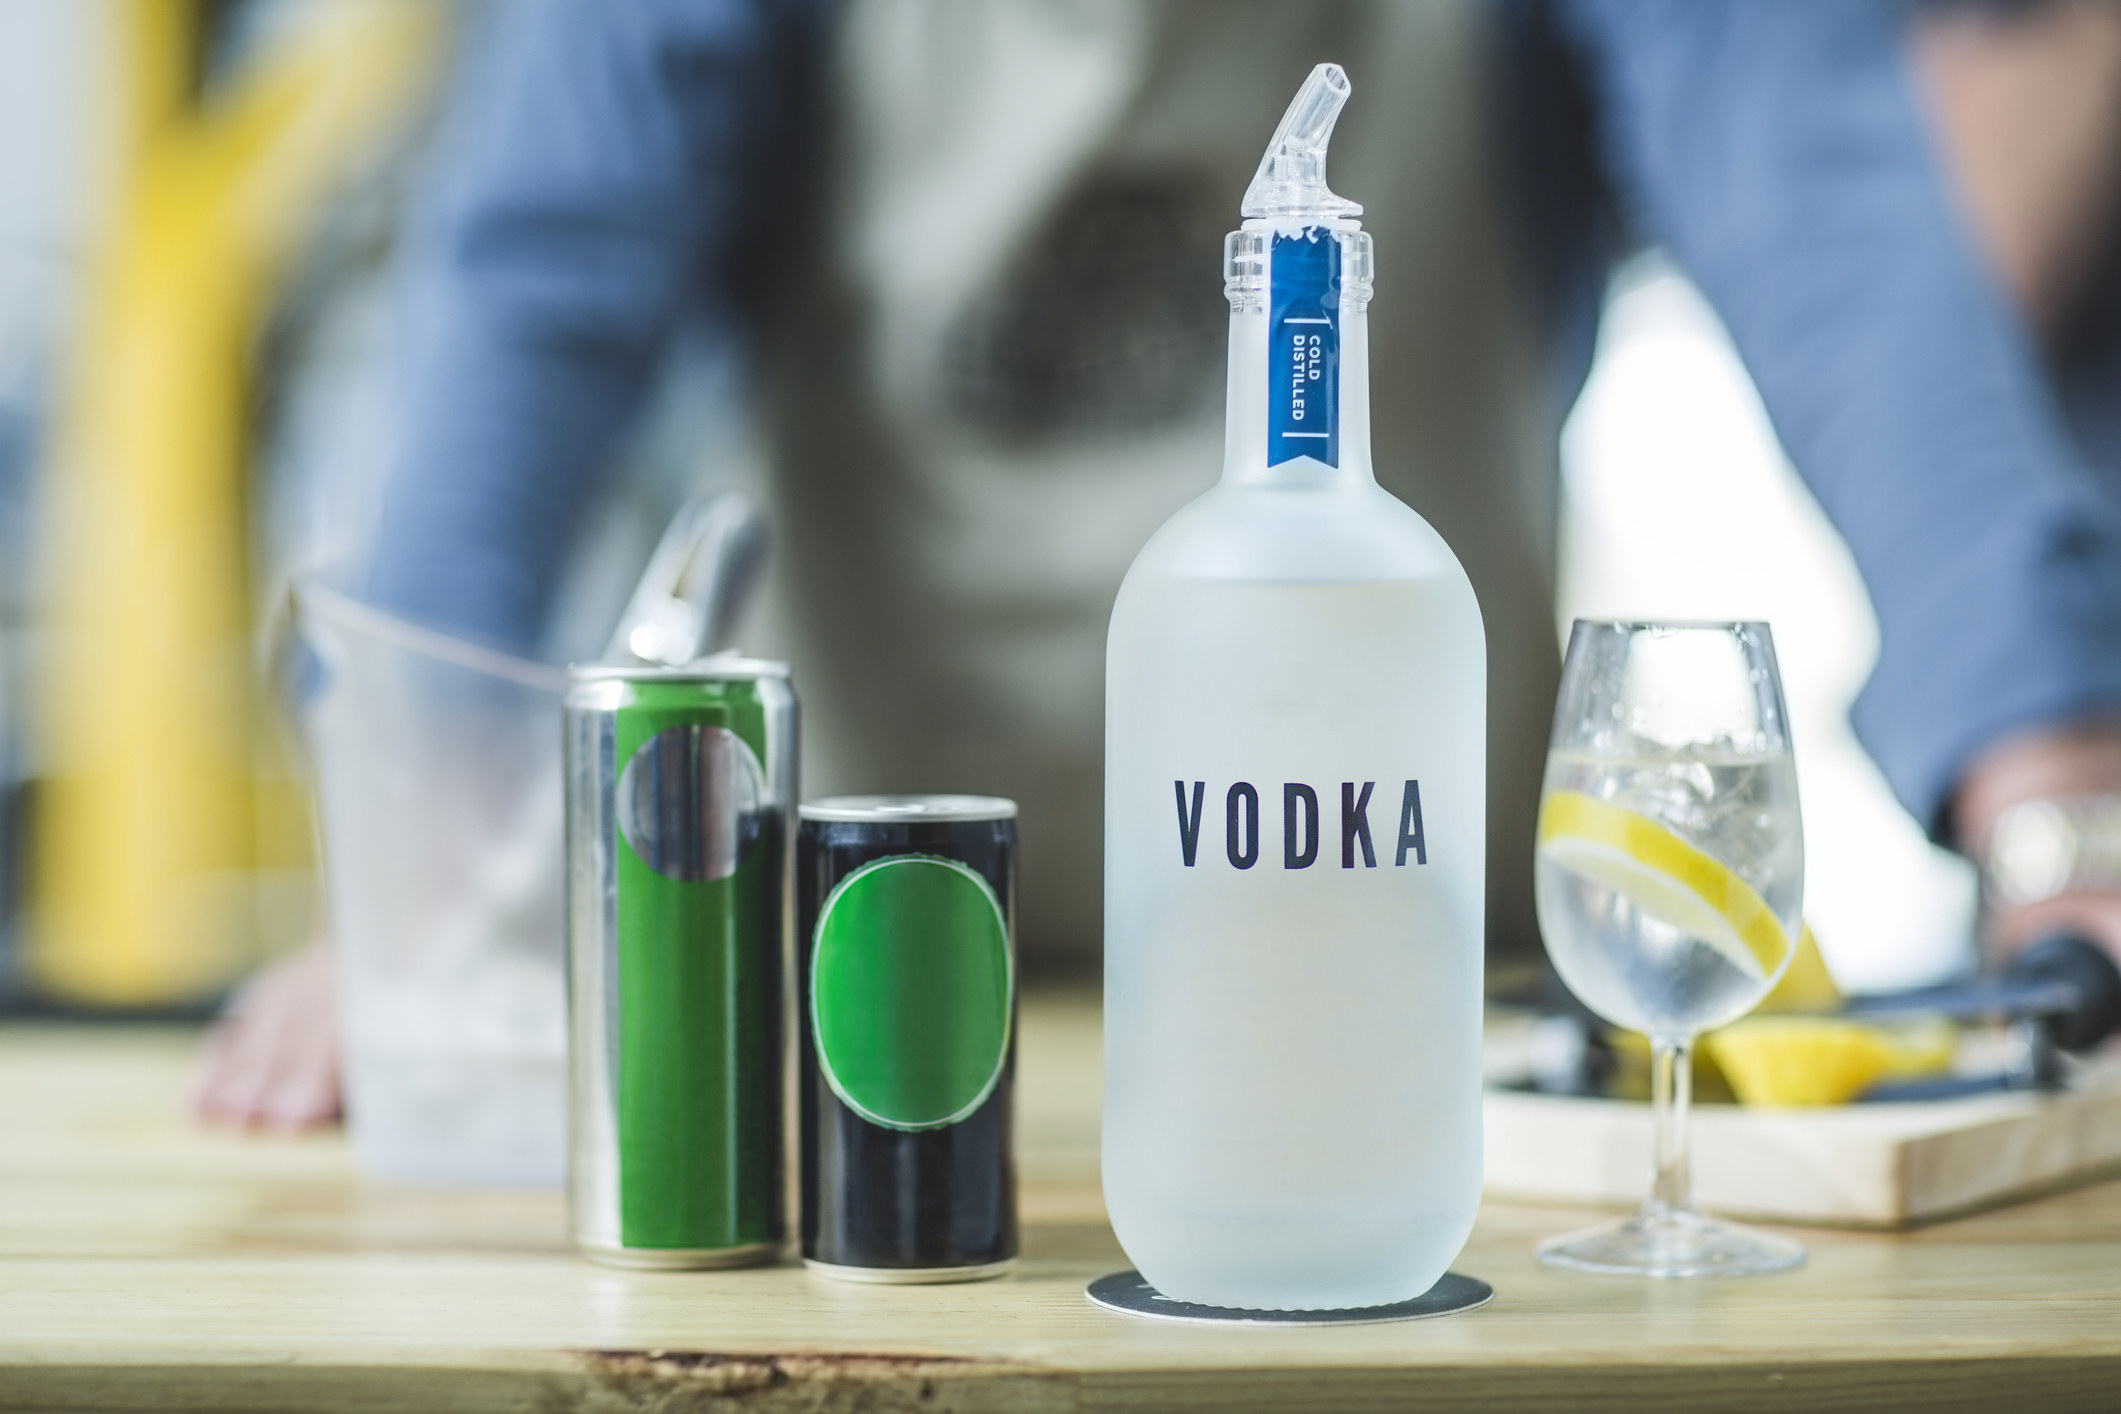 A bottle of vodka